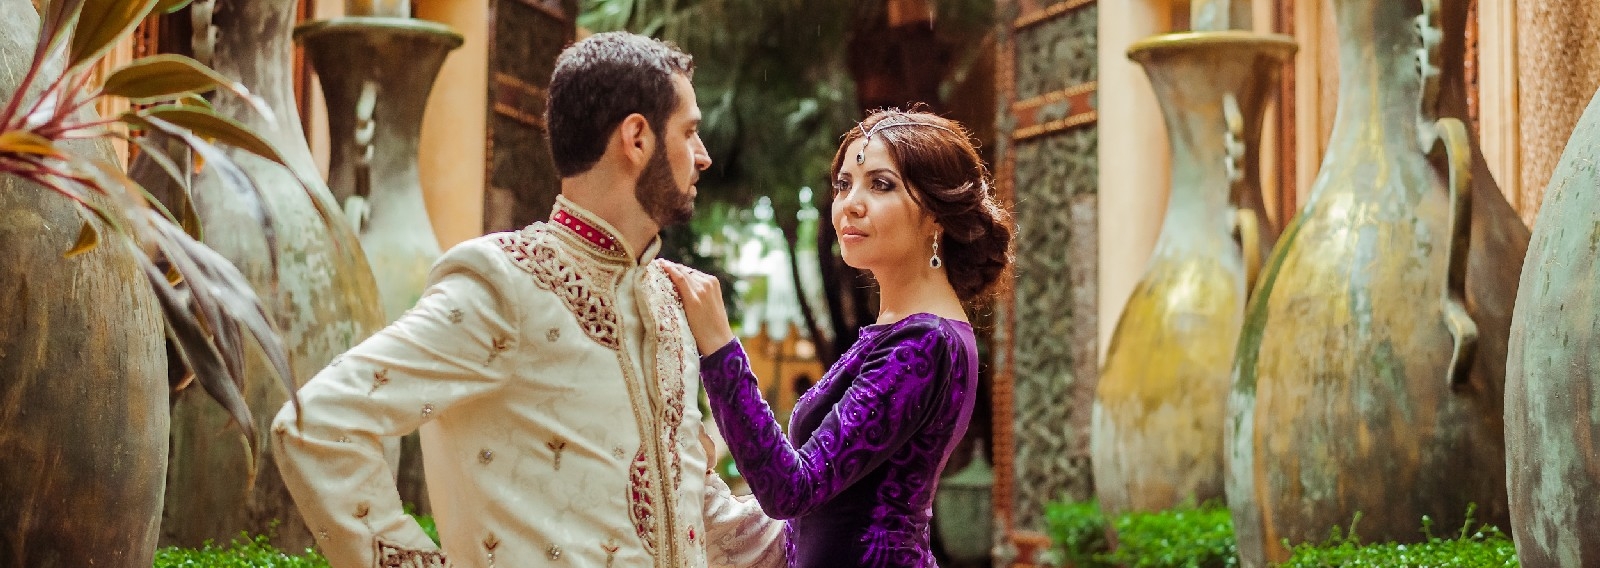 Восточная свадебная сказка Мехмета и Салтанат на Пхукете